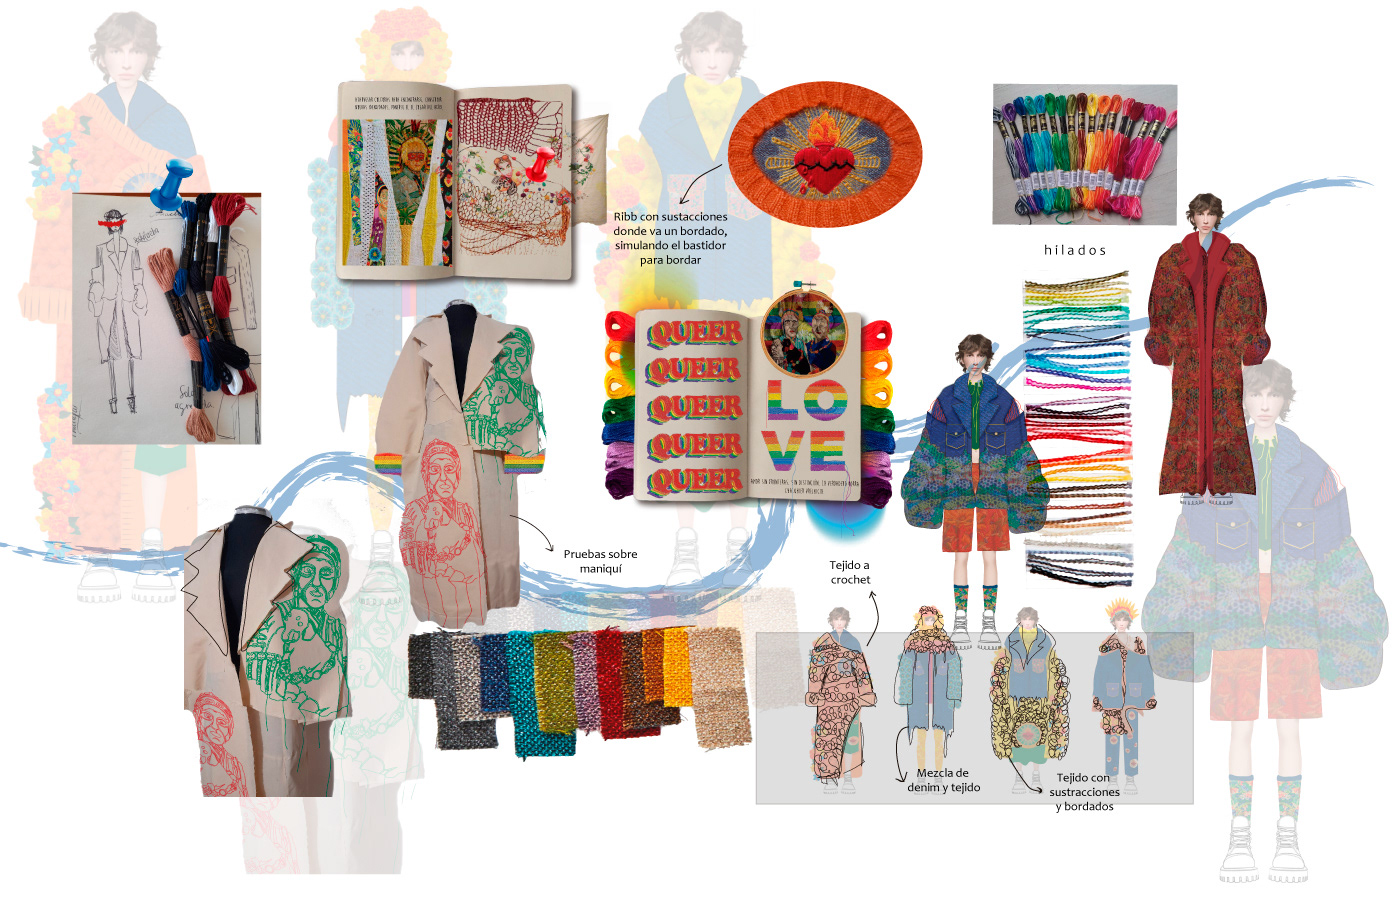 fashion design Fiorini chiachio & giannone moda portfolio fashion portfolio LGBT knitwear art